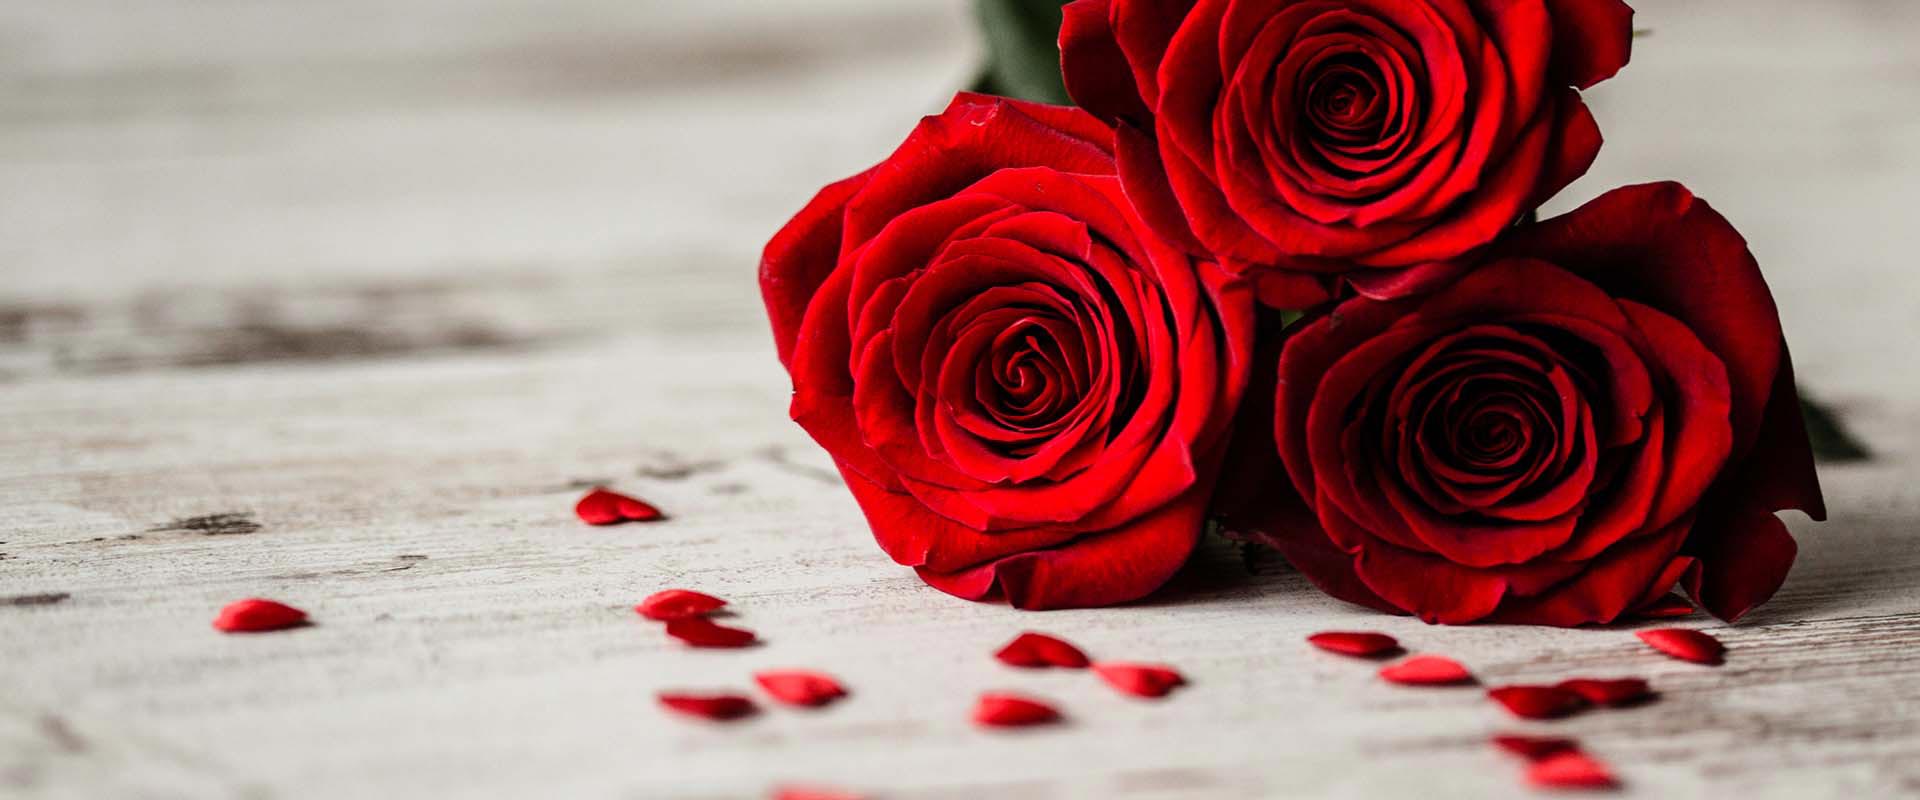 Image Result For Kata Romantis Di Hari Valentine